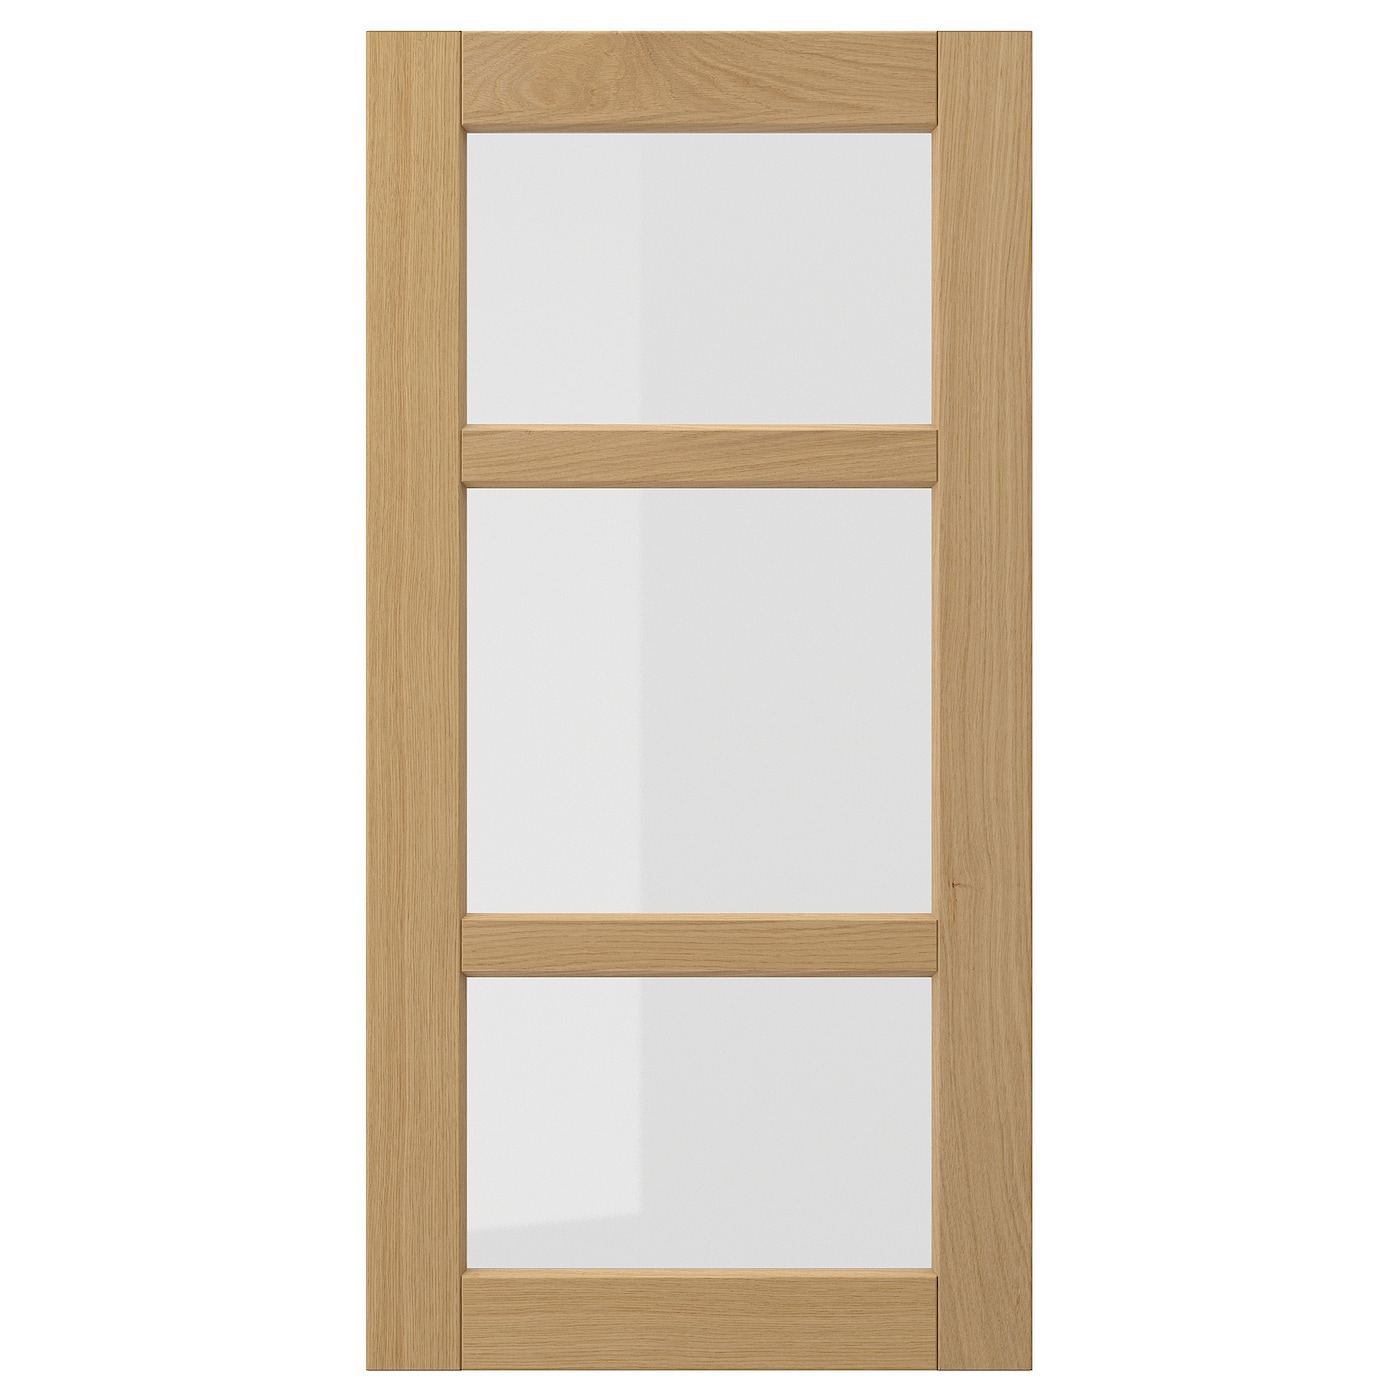 Стеклянная дверца - FORSBACKA IKEA/ ФОРСБАКА ИКЕА,  80х40 см, под беленый дуб